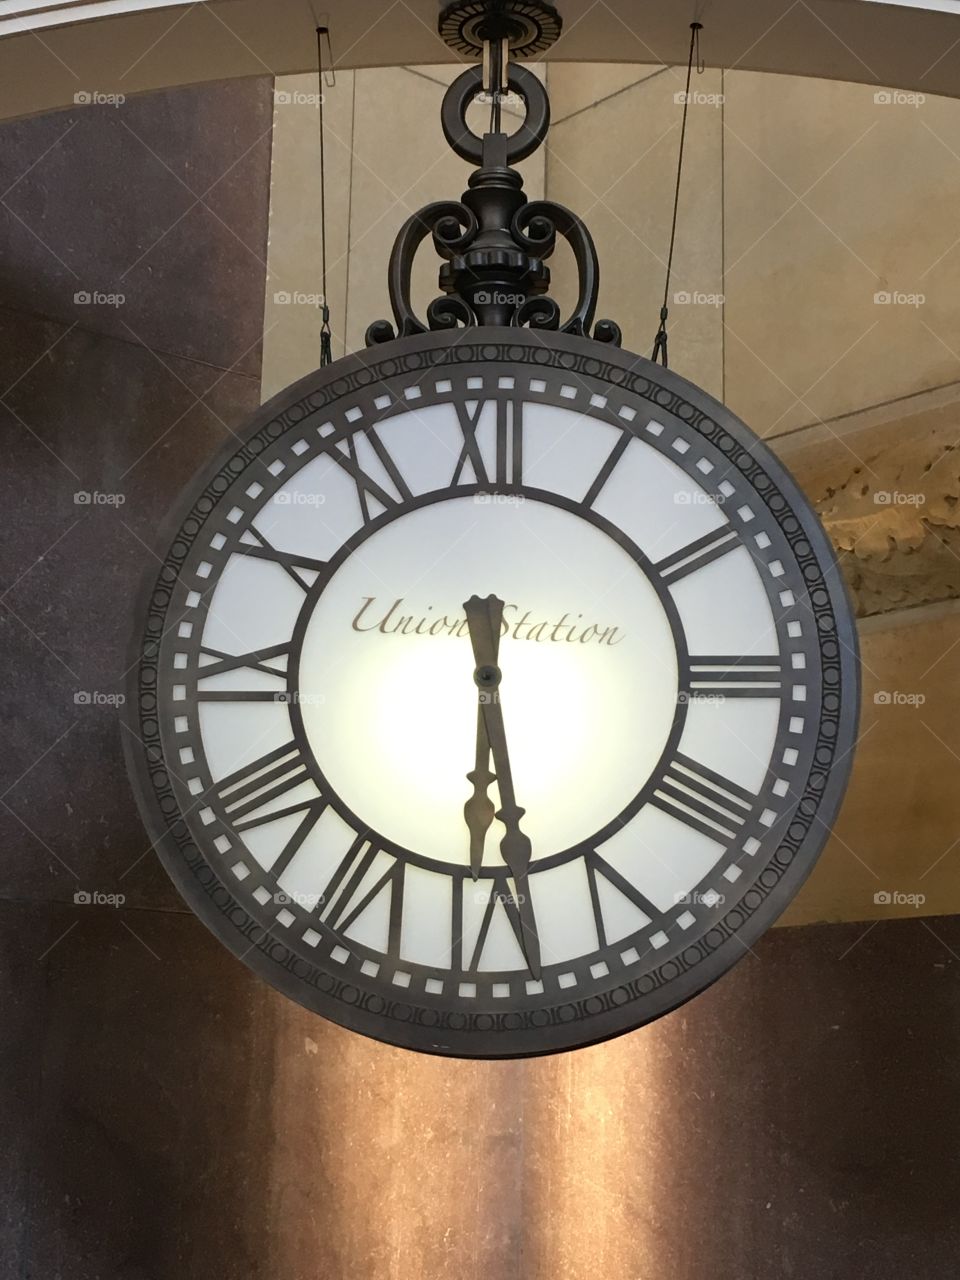 Union Station Clock